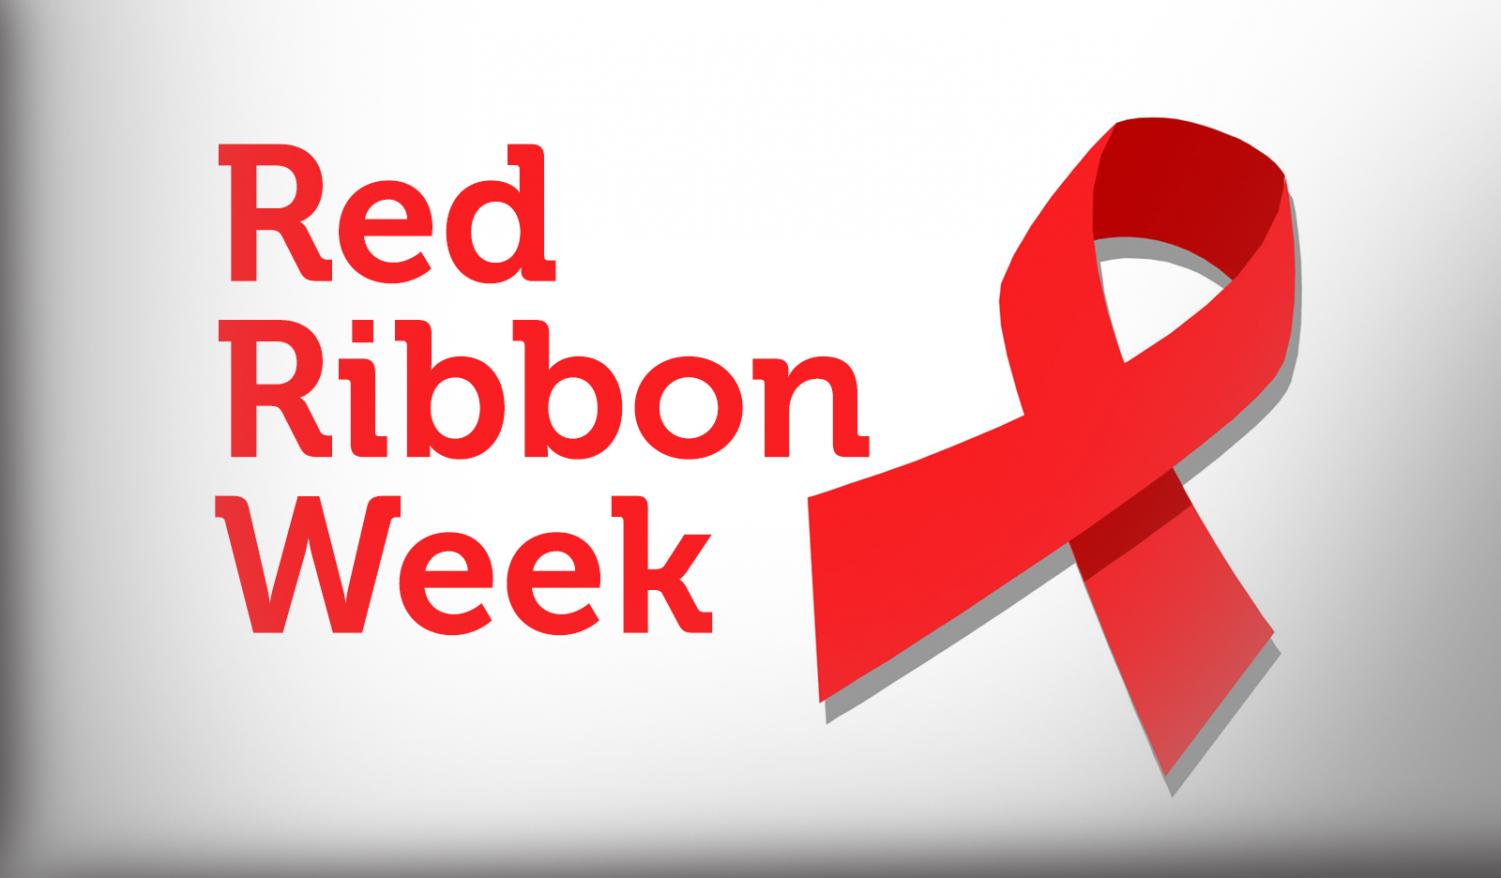 red ribbon week flyer